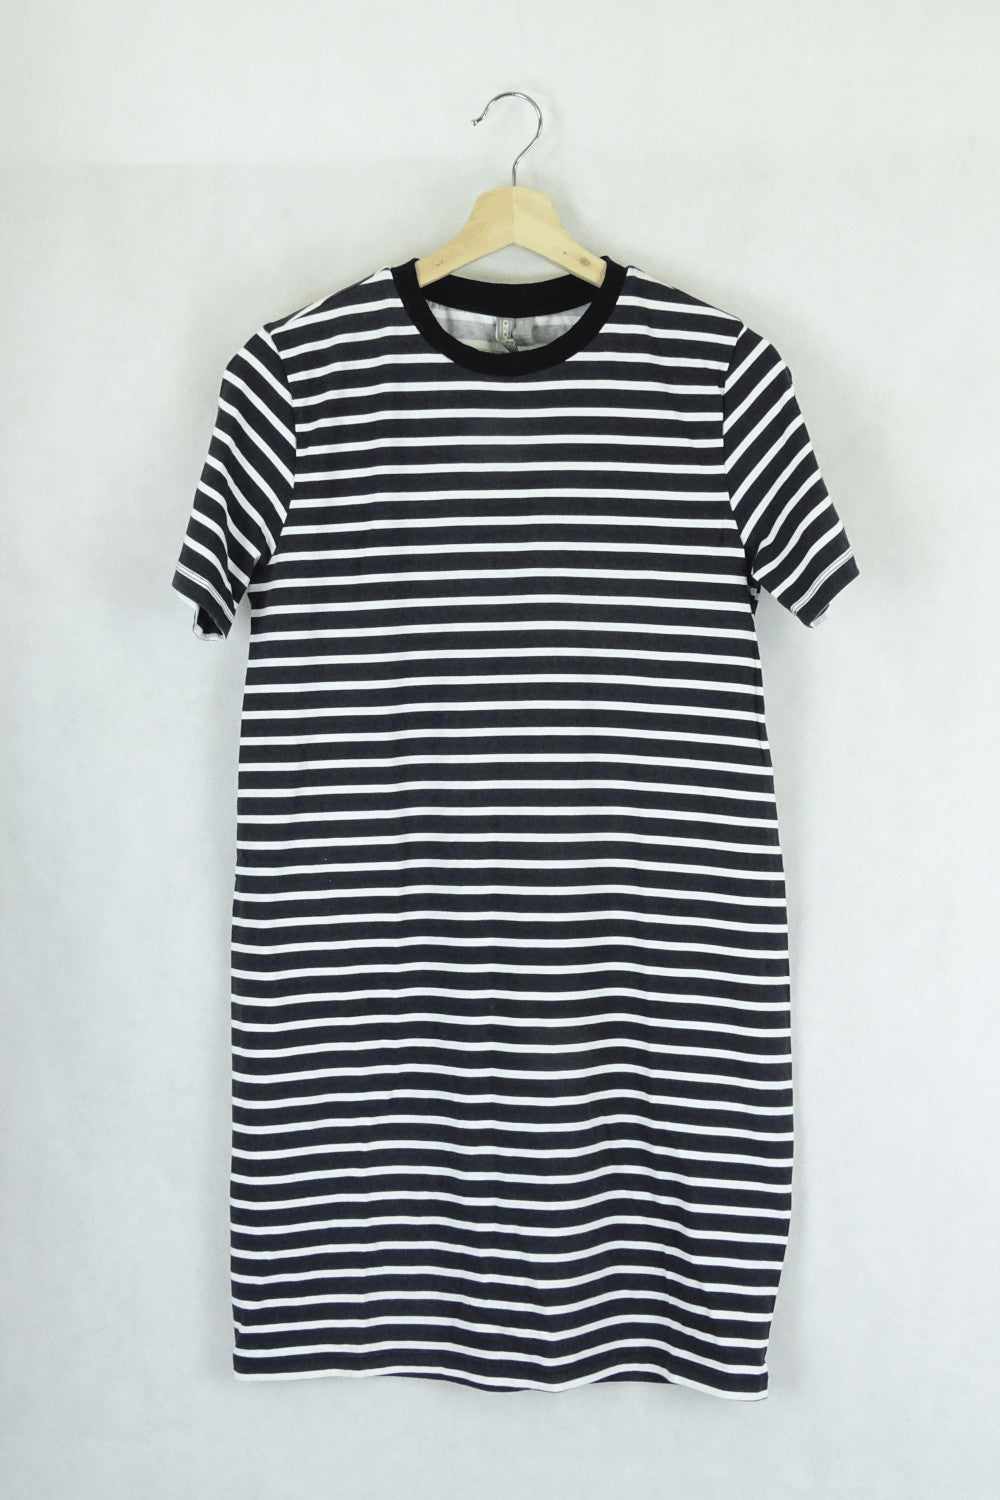 Asos Black And White Striped Dress 12